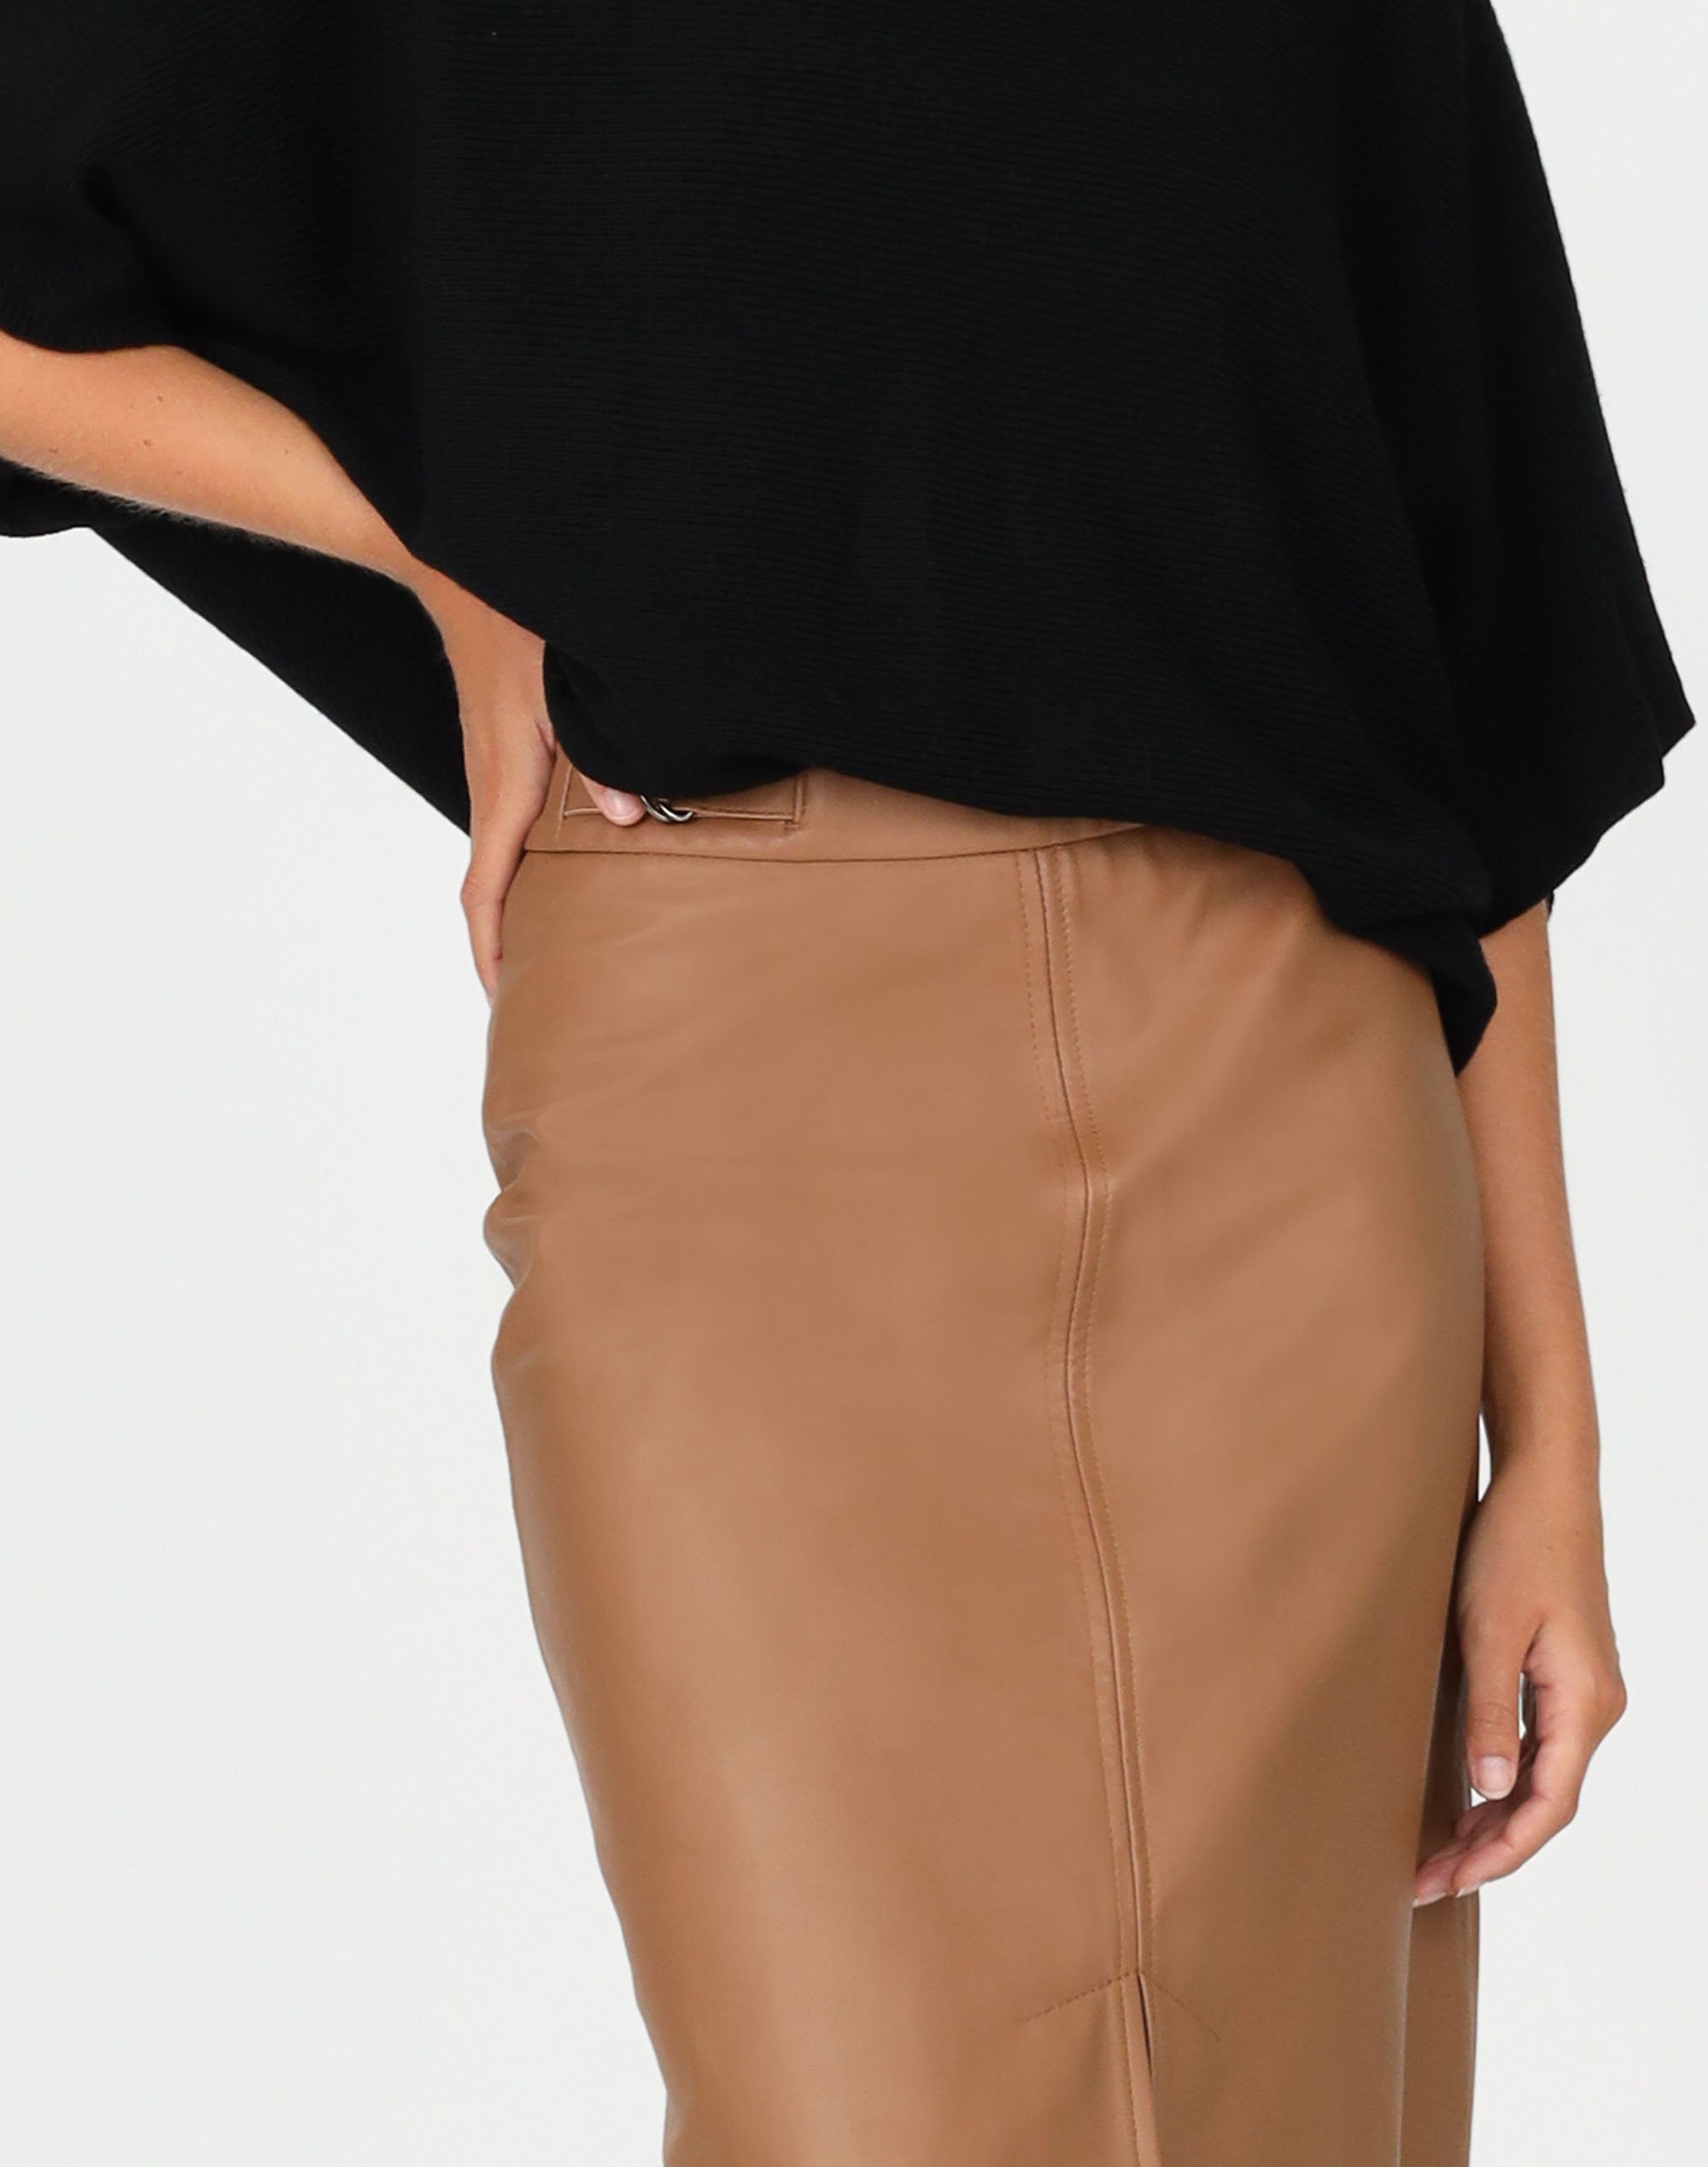 Tab Detail Leather Skirt